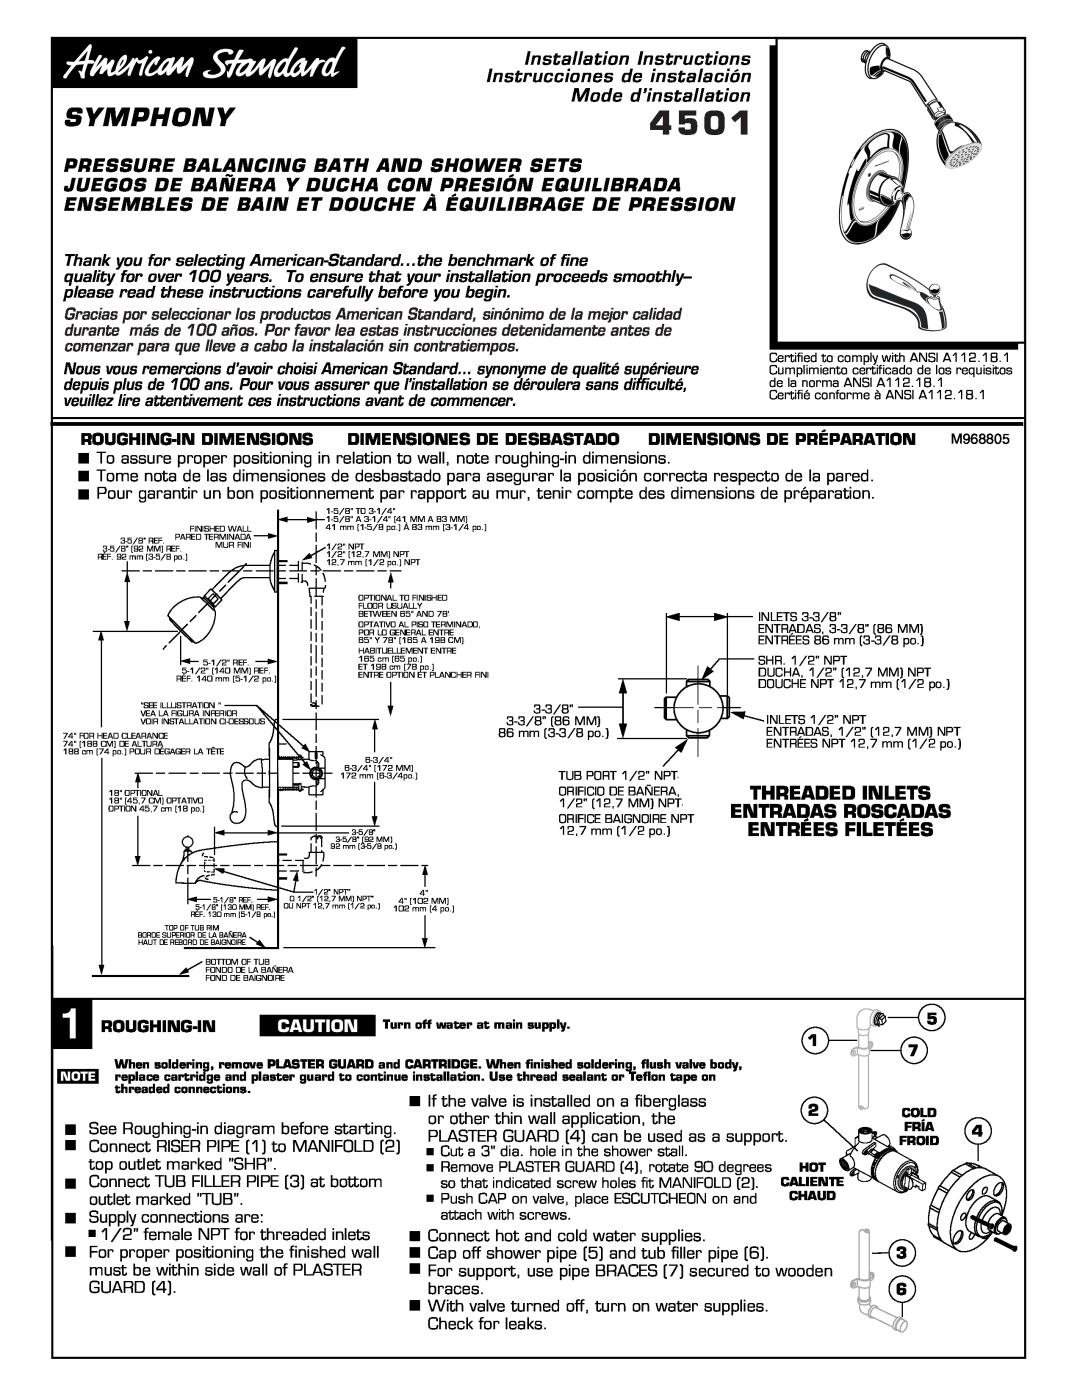 American Standard 4501 installation instructions Symphony, Threaded Inlets, Entradas Roscadas, Entrées Filetées 